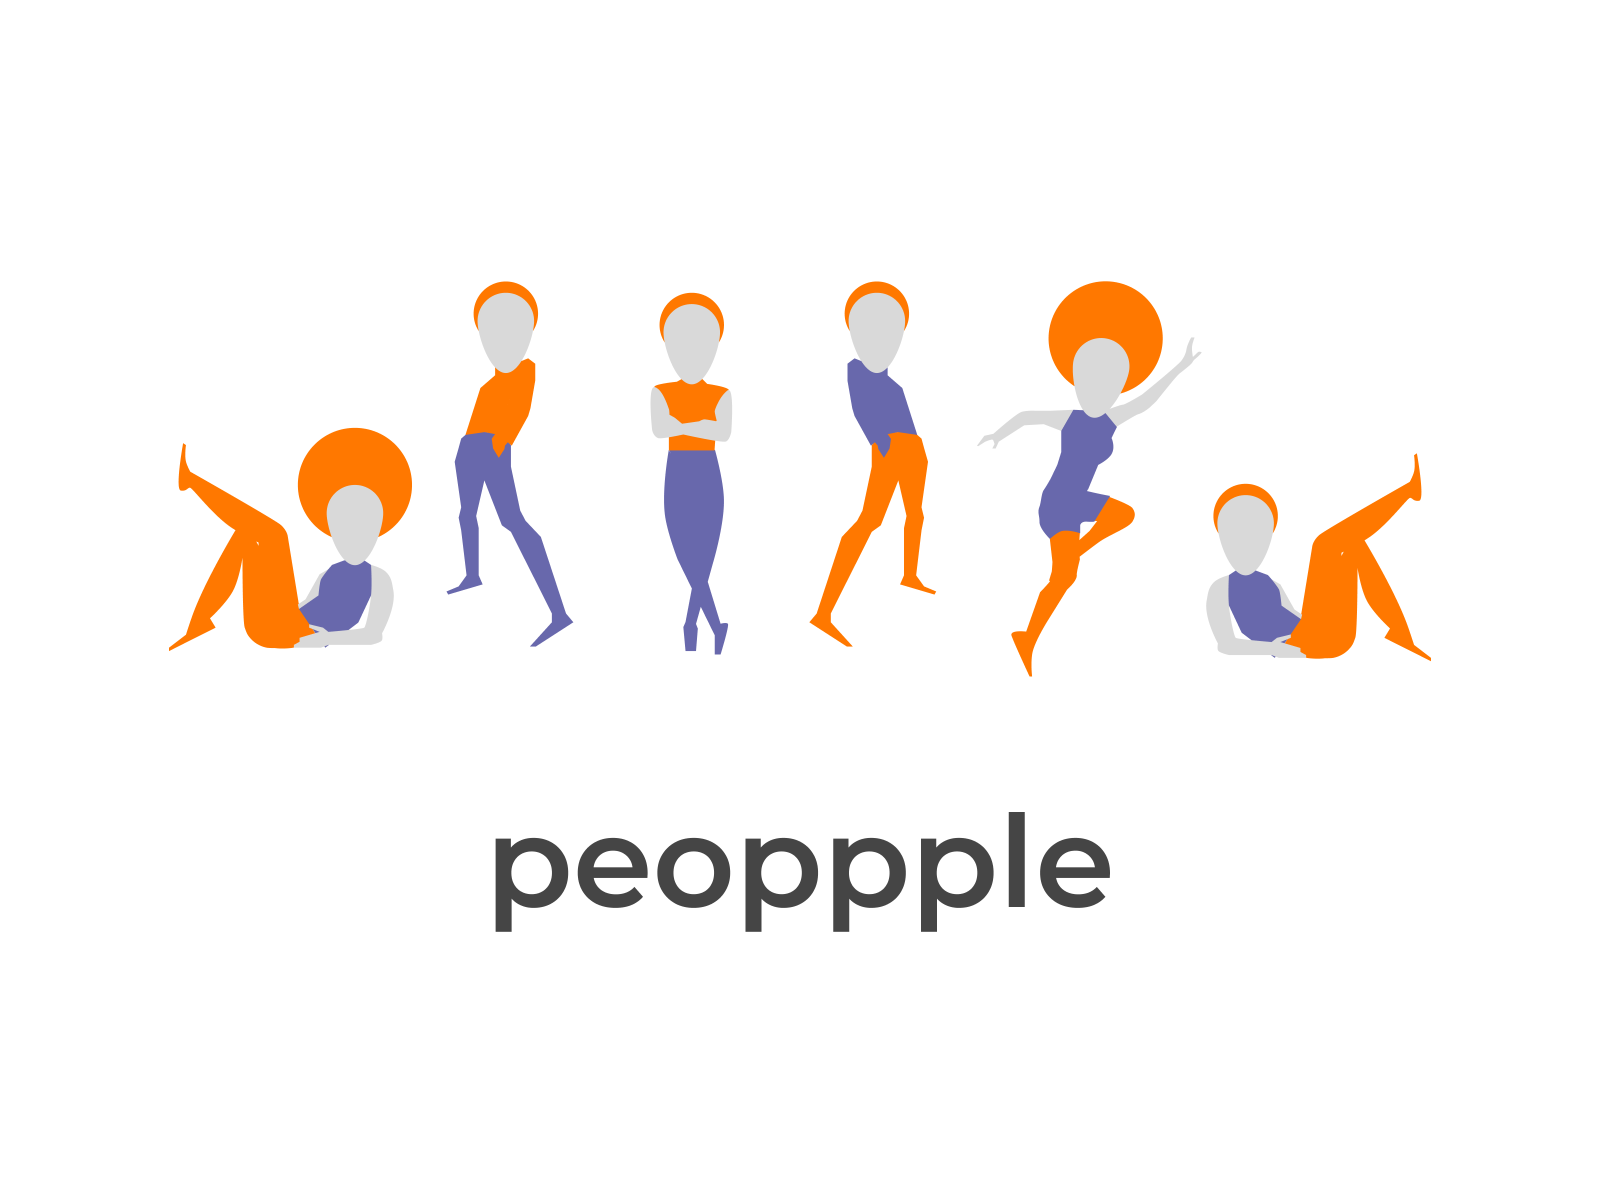 Just Orange People by Roman Pytalev on Dribbble